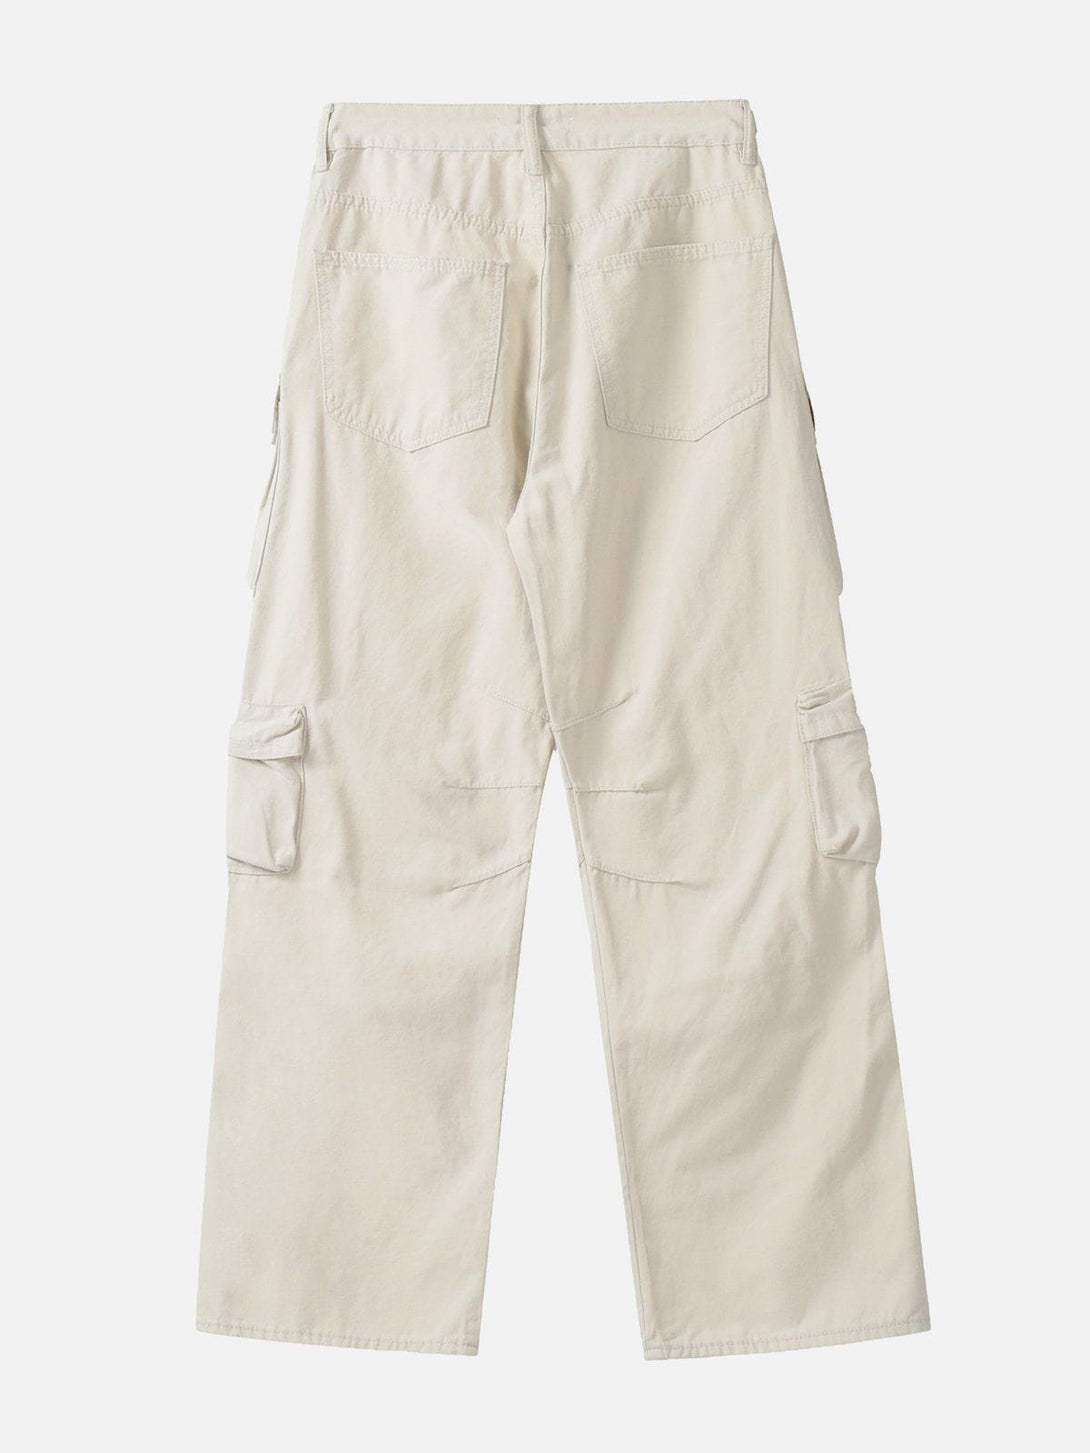 Majesda® - Vintage Multi-pocket Cargo Pants outfit ideas streetwear fashion